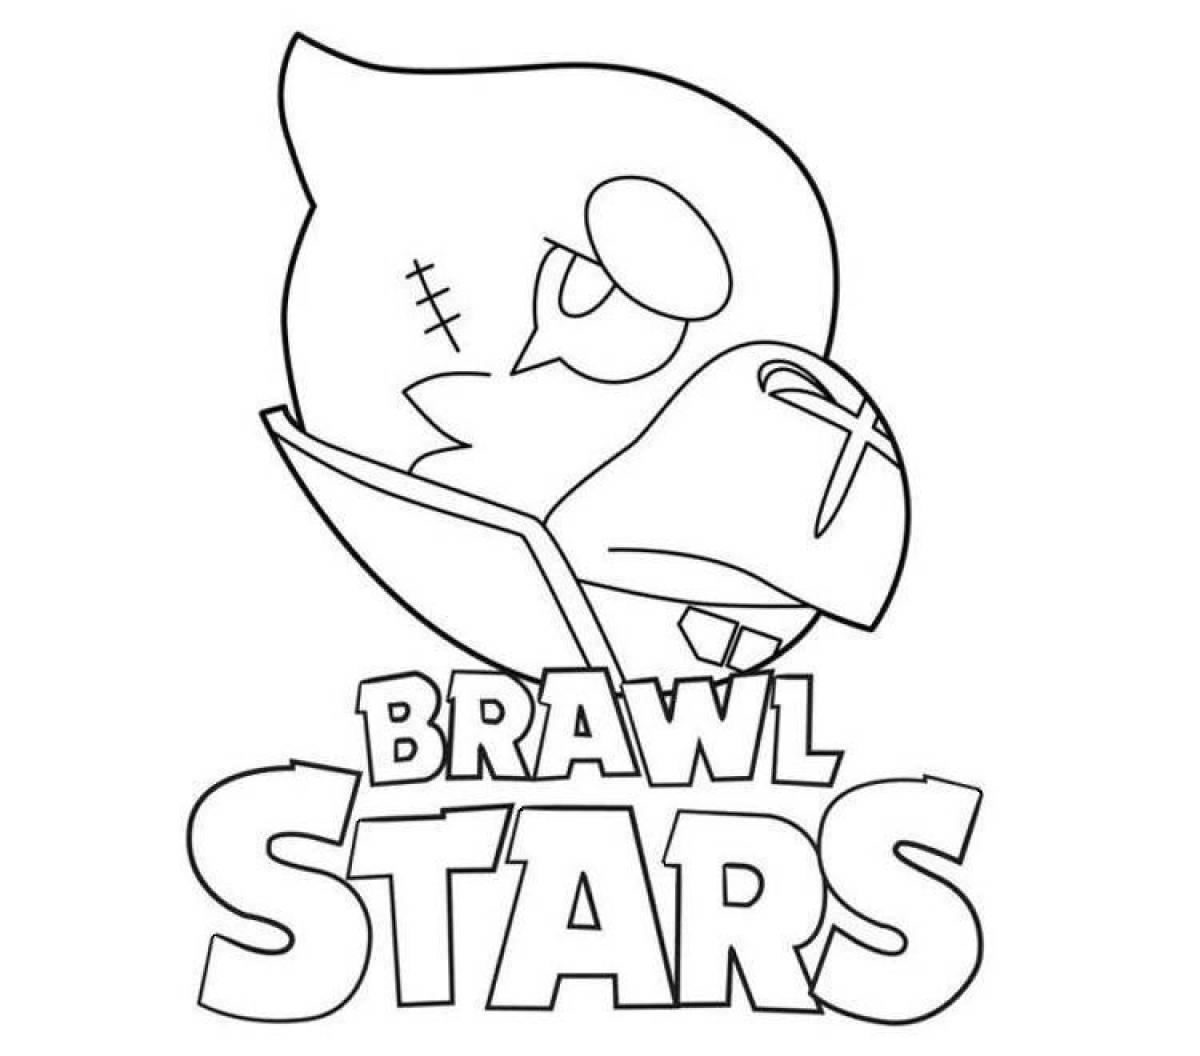 Bravo stars mysterious logo coloring book